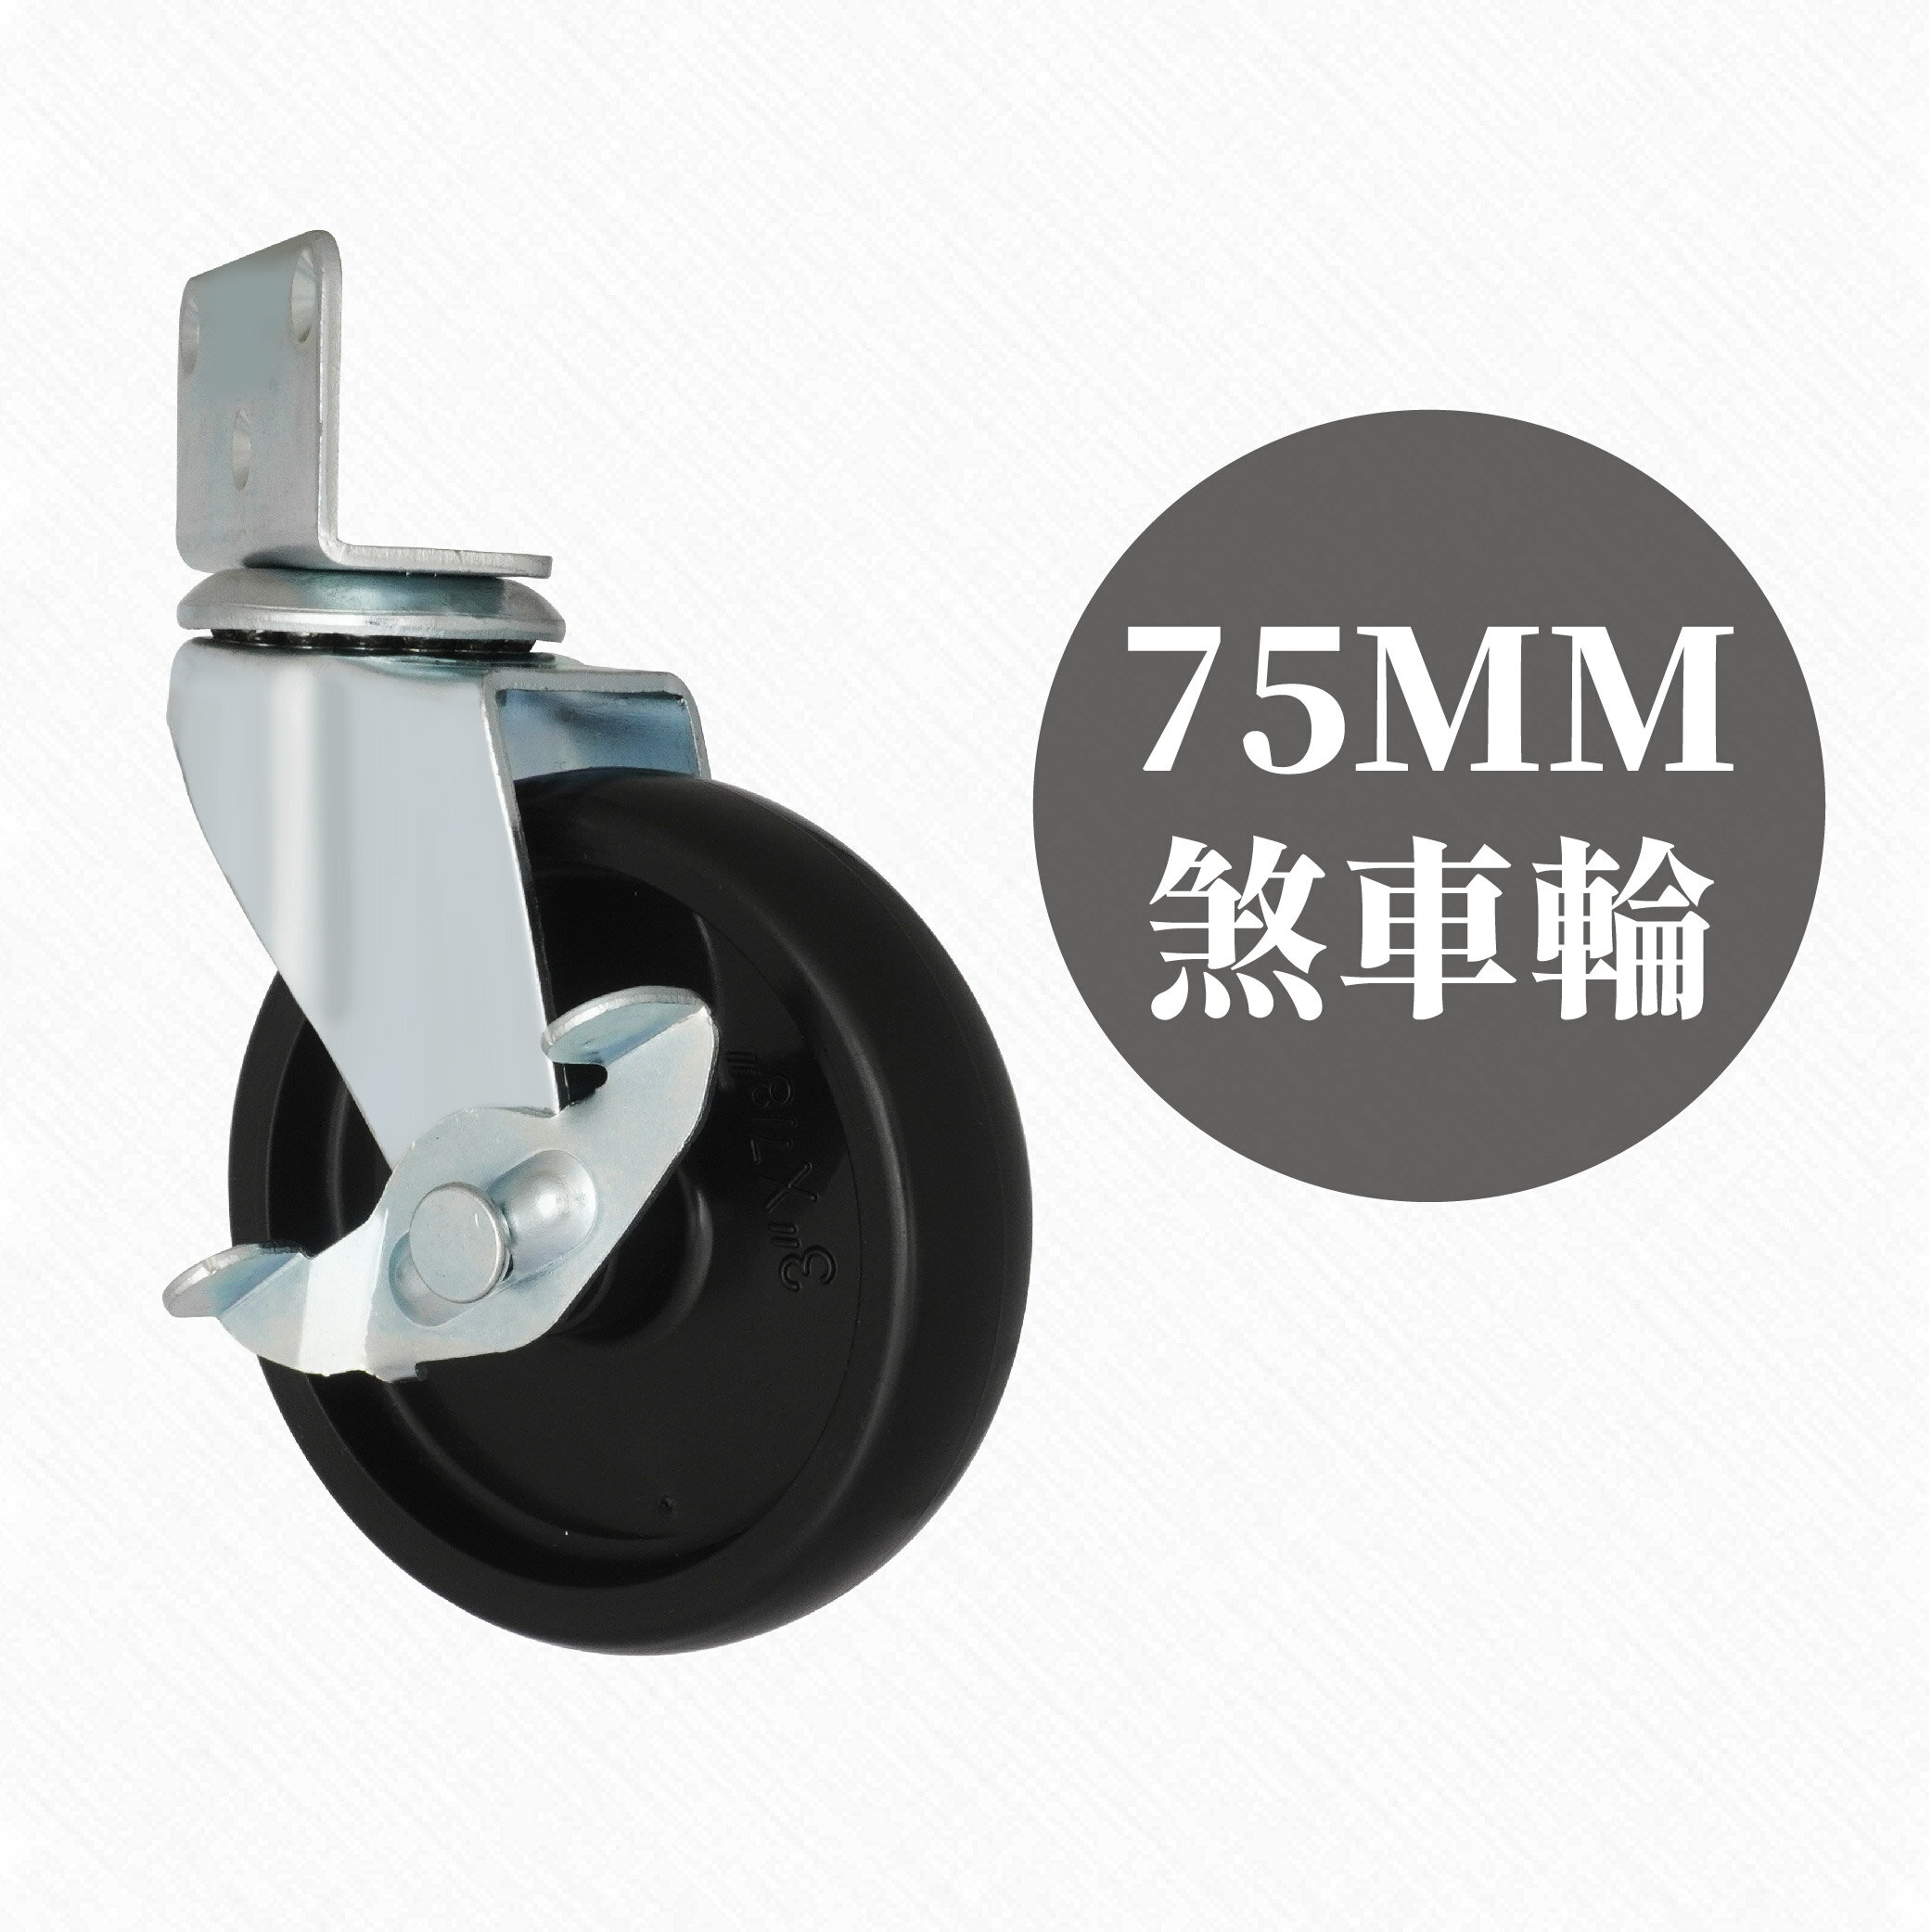 AXL L型四角板 75mm 3英吋PP輪 活動輪 煞車輪可用於嬰兒床、花架、任何木製家具 (台灣製造)